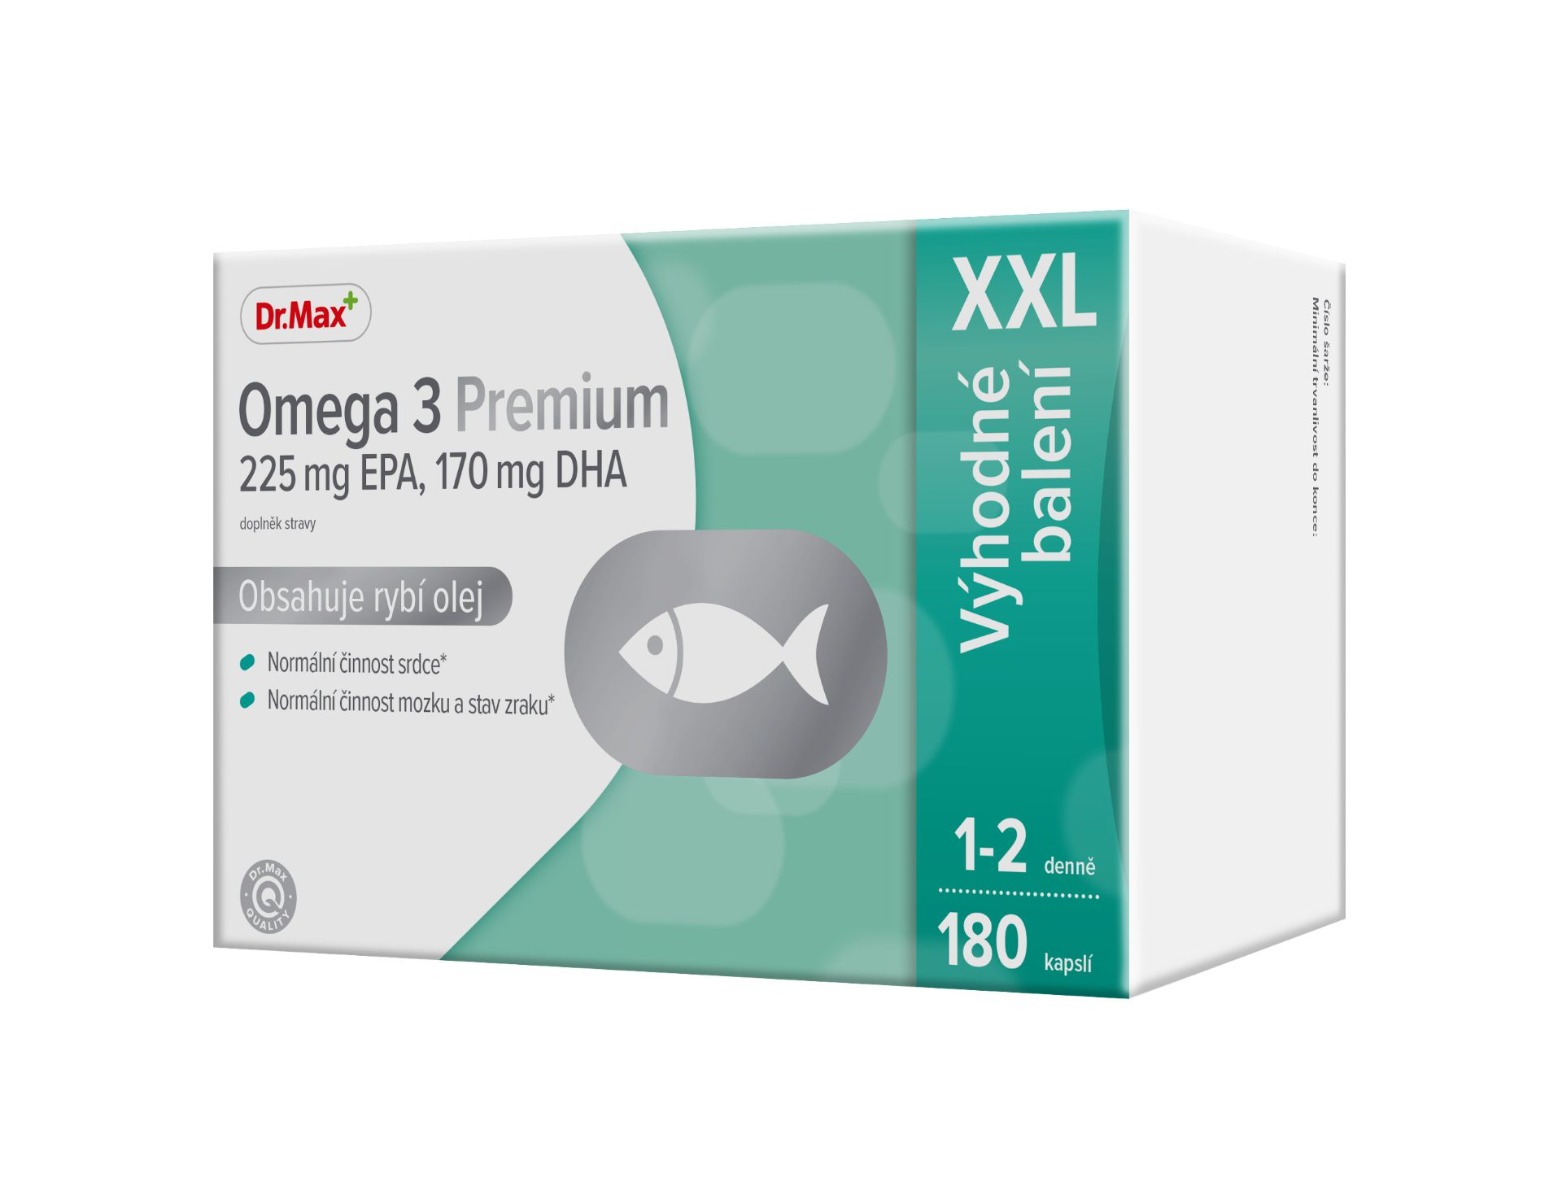 Dr. Max Omega 3 Premium XXL 180 kapslí Dr. Max